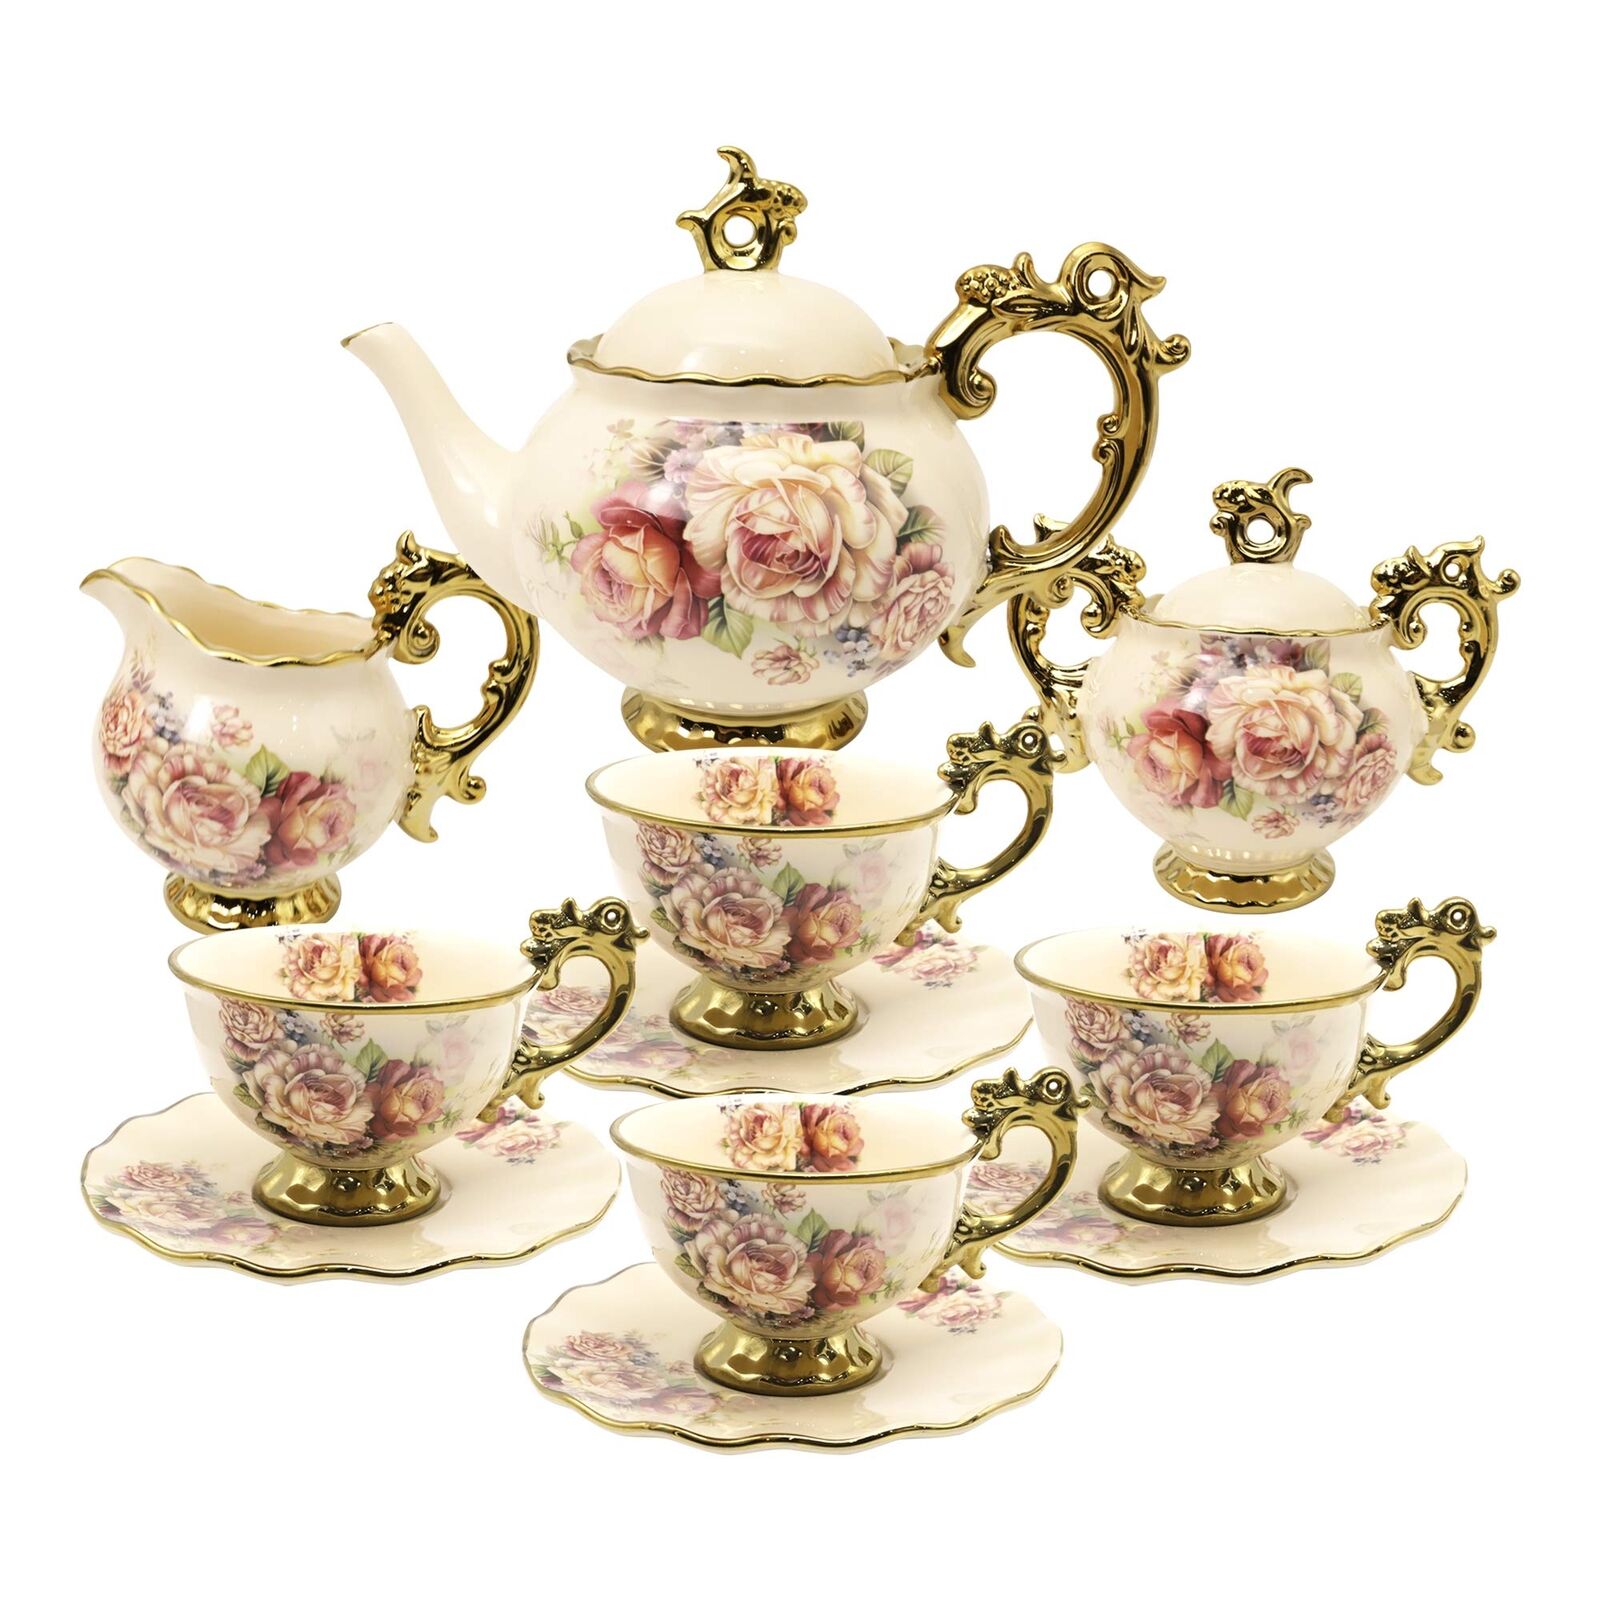 15 Pieces British Porcelain Tea Set Floral Vintage China Coffee Set Wedding Tea